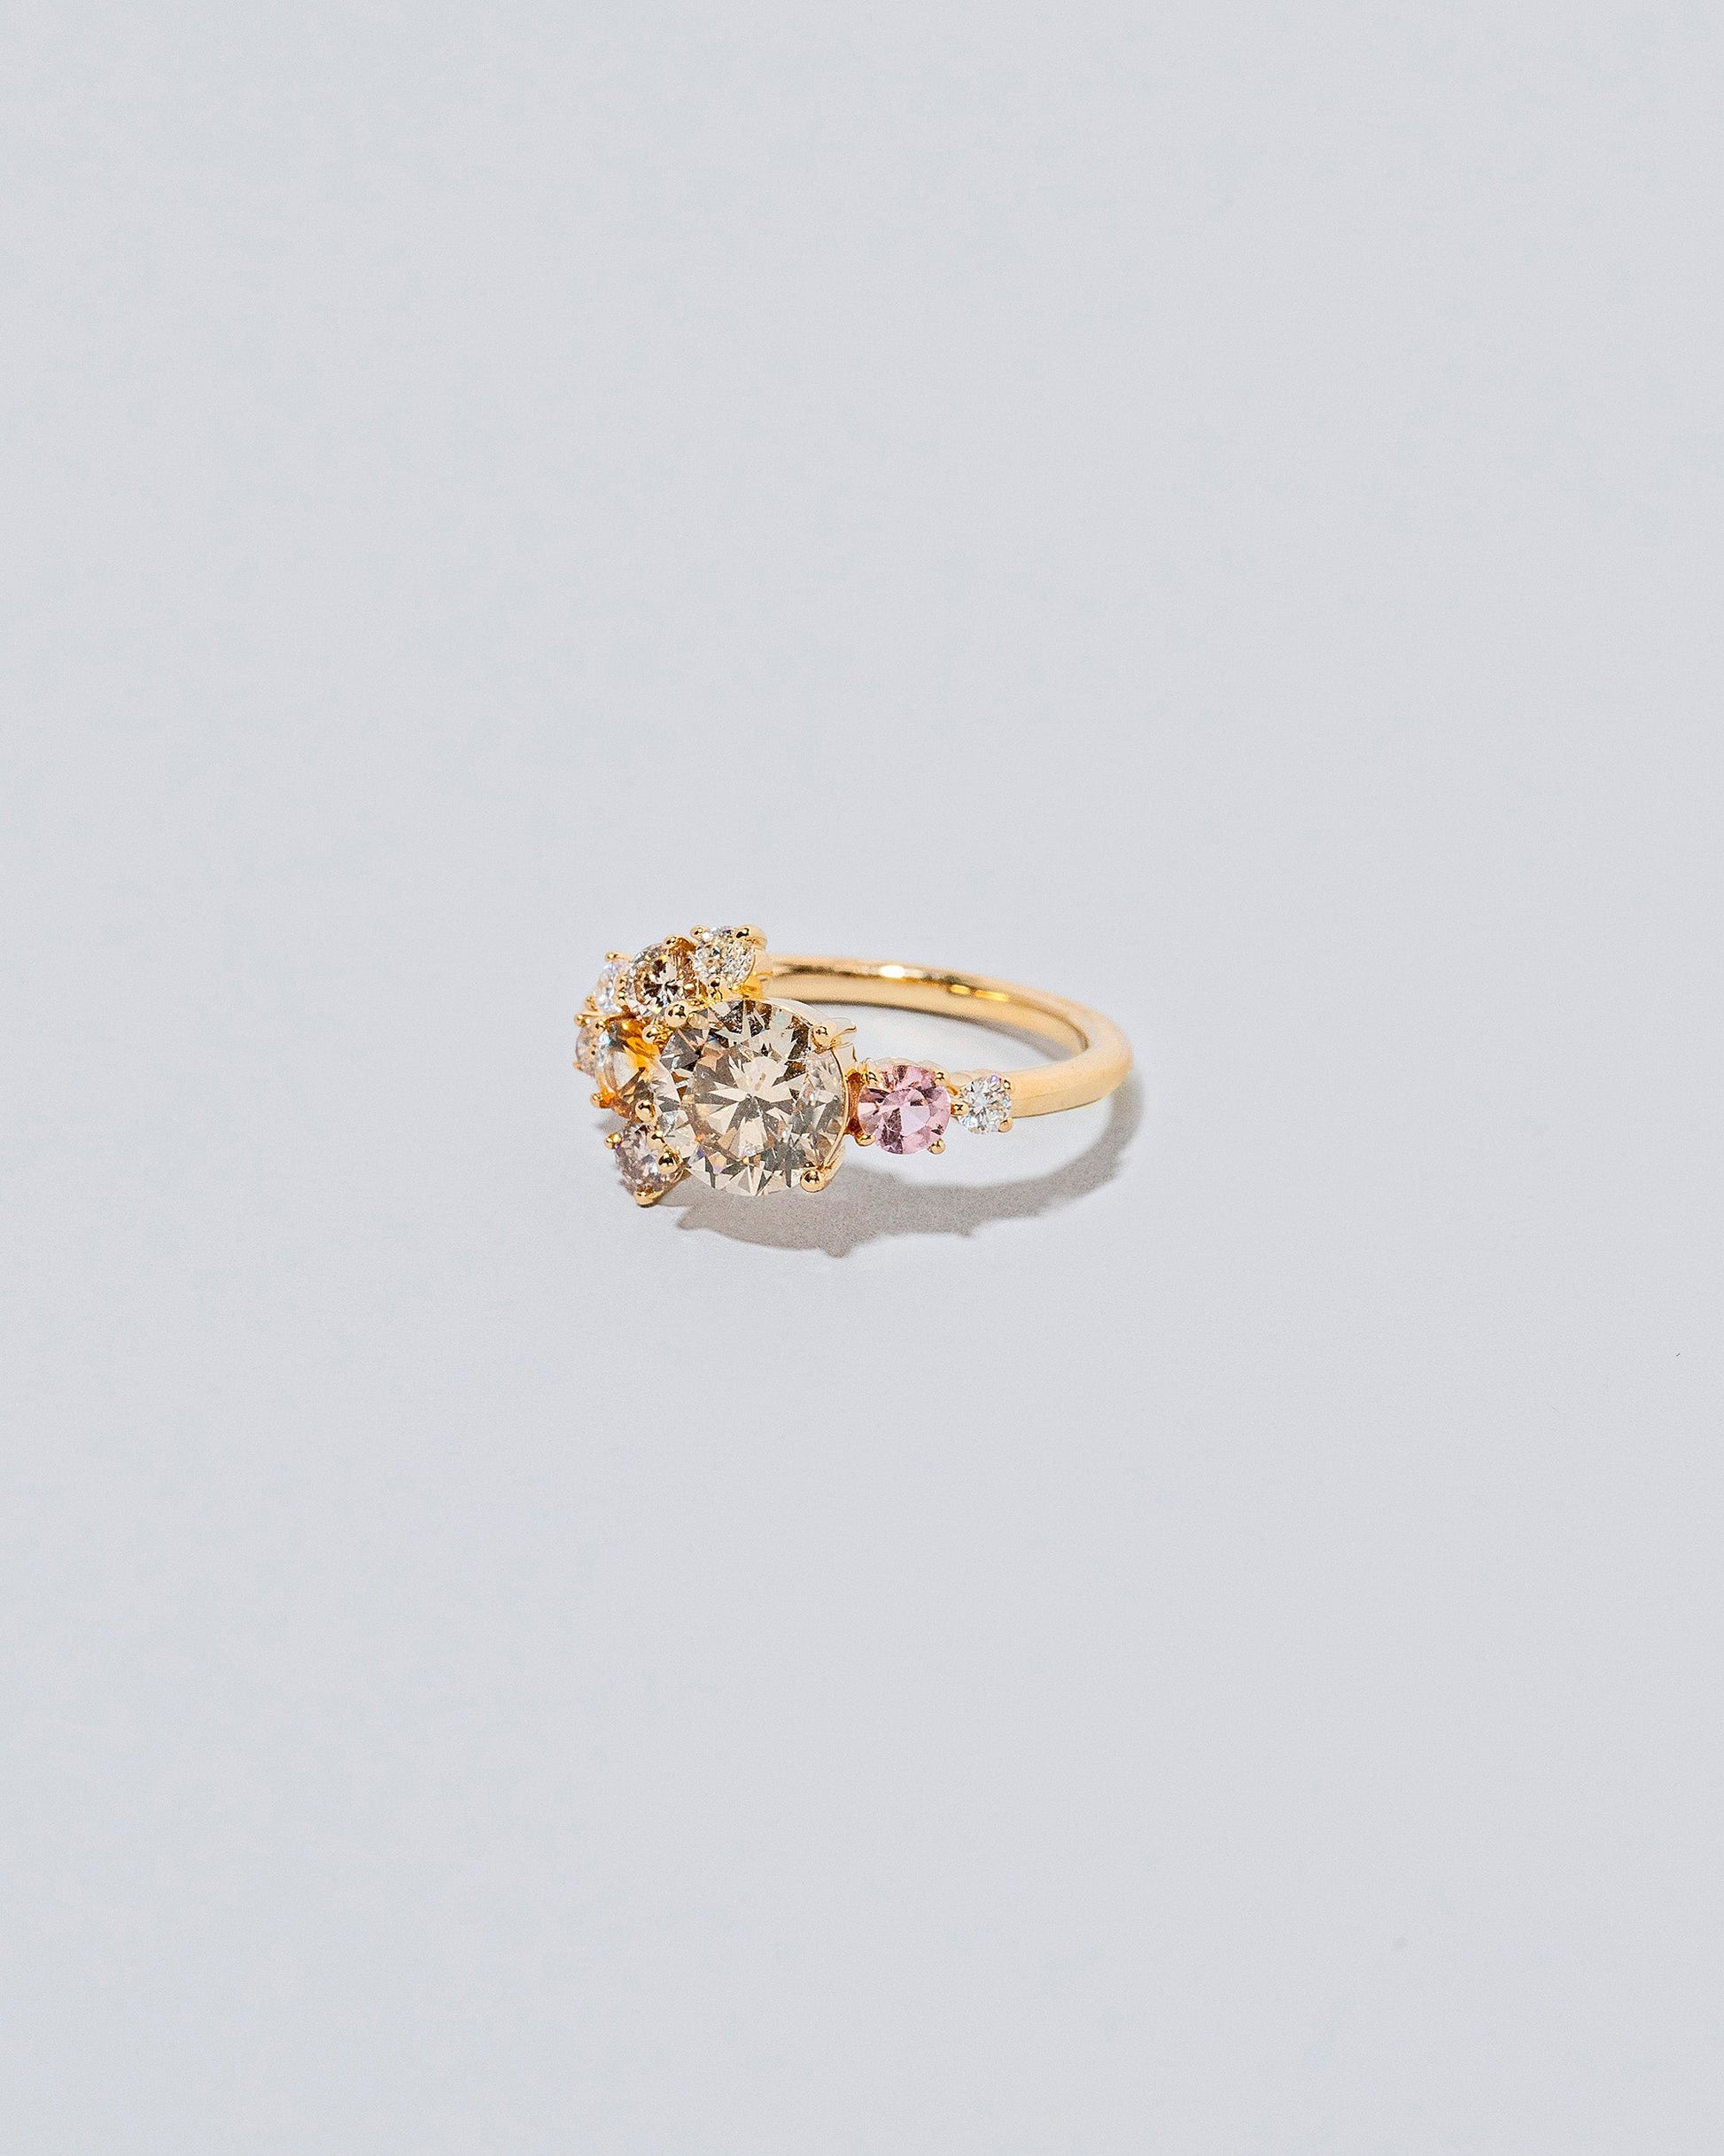 Vega Ring - Champagne Diamond on light color background.